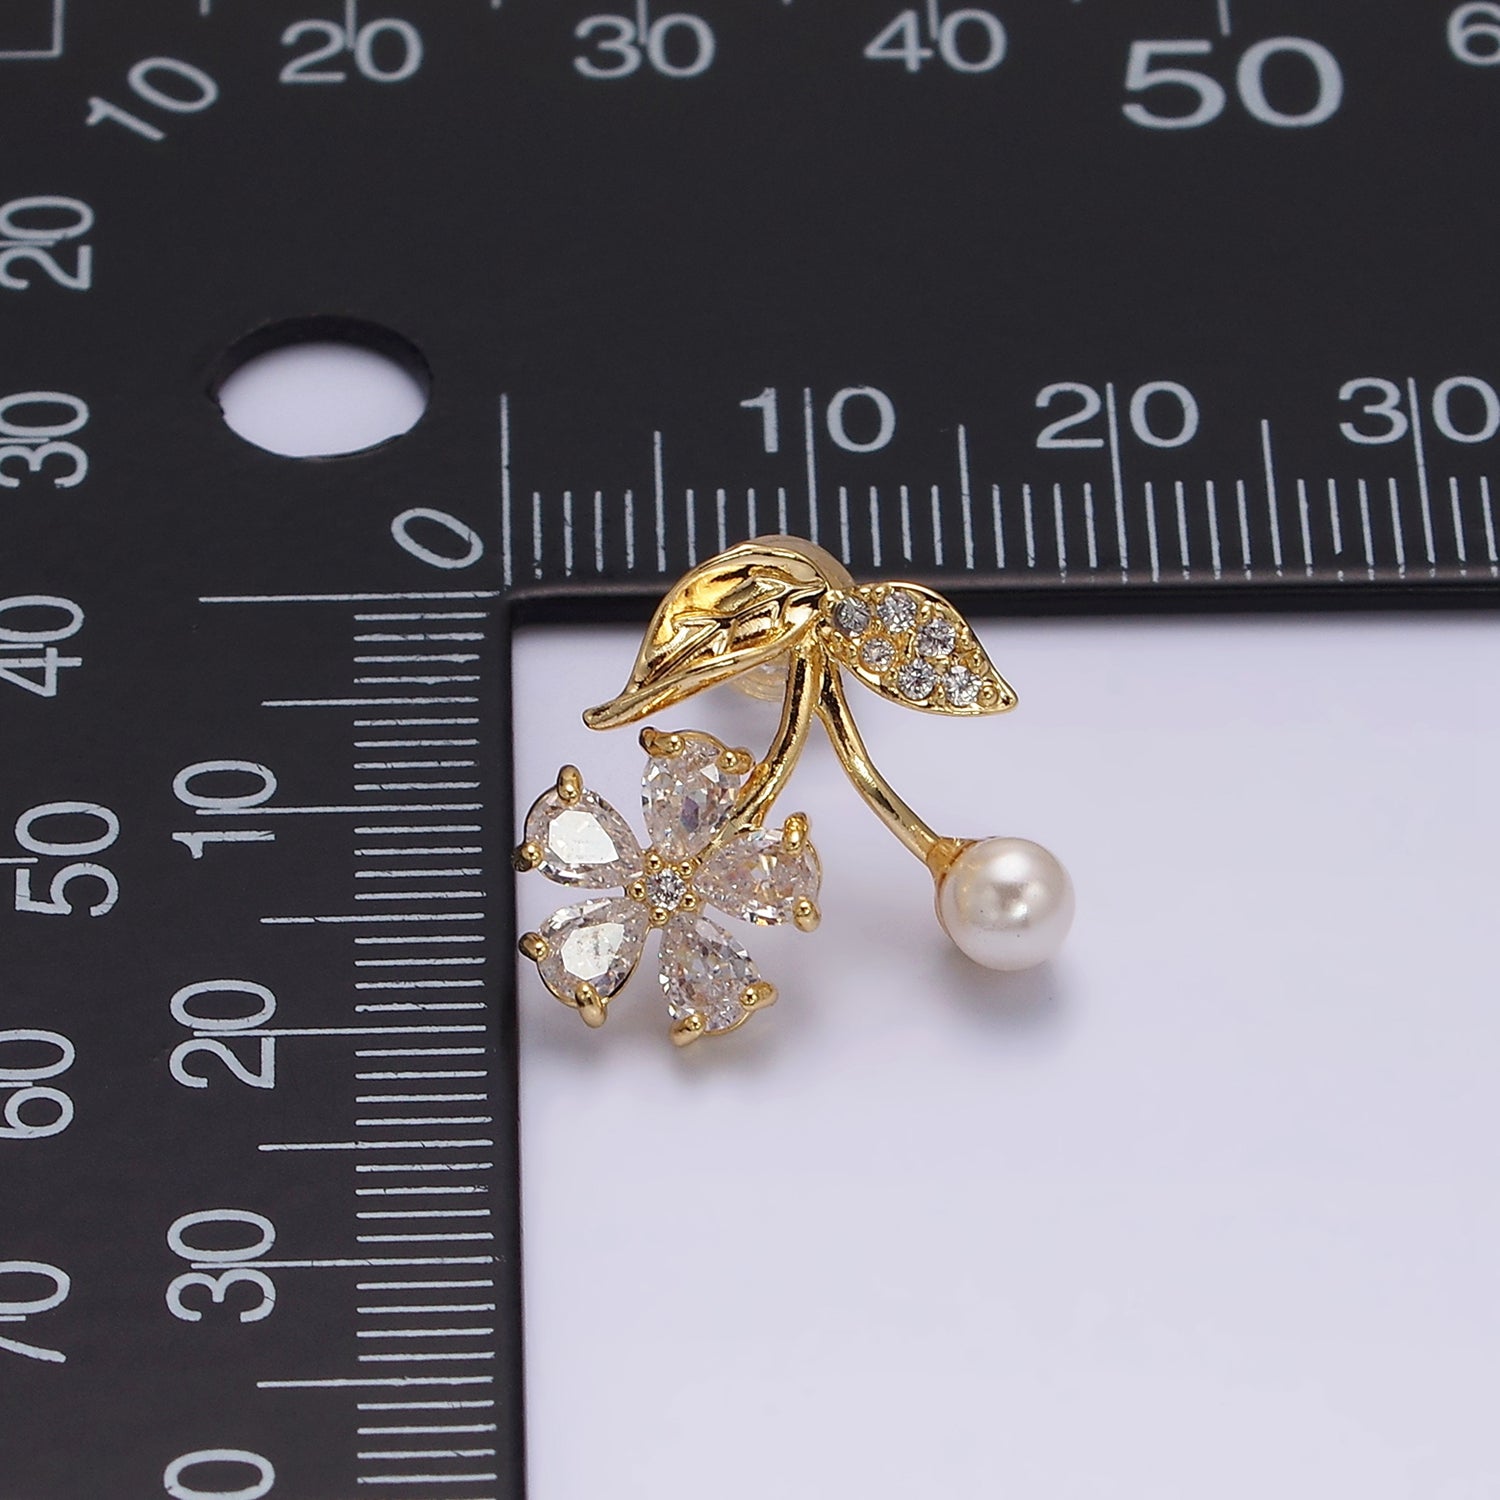 16K Gold Filled Micro Paved Flower Clear Teardrop CZ Pearl Cherry Stud Earrings | AE843 - DLUXCA